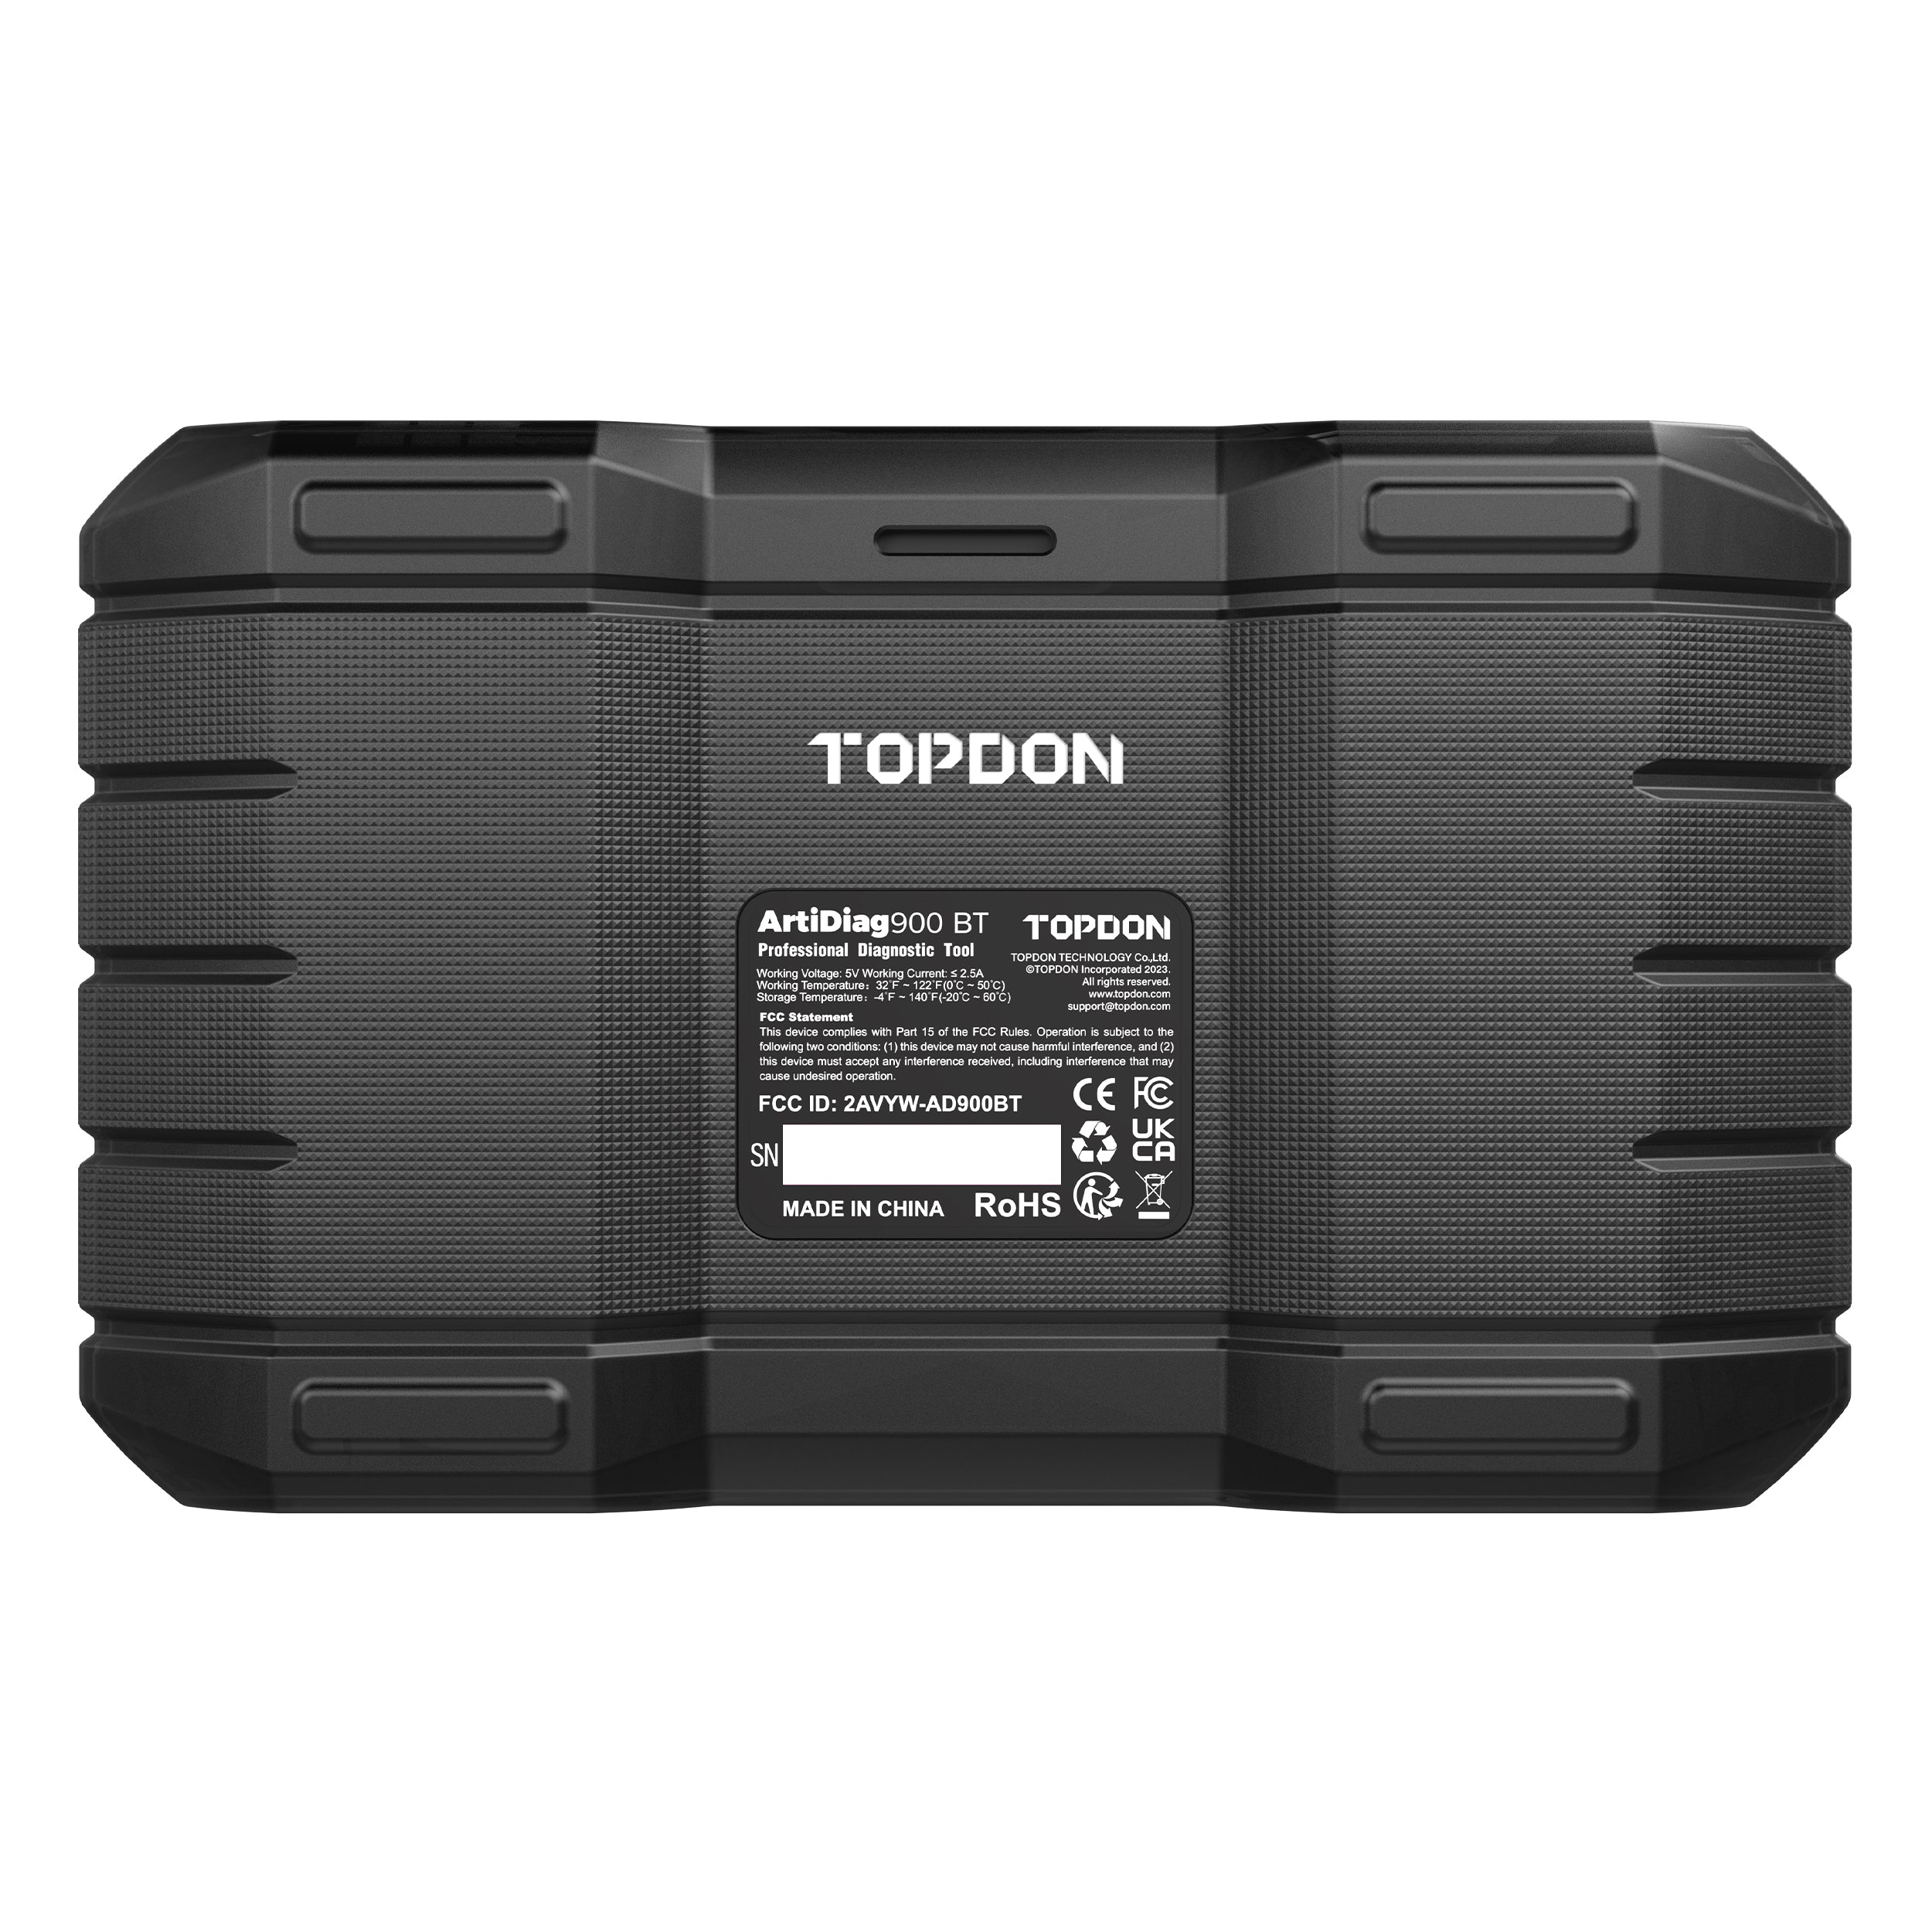 TOPDON ArtiDiag900 Lite OBD2 Wireless Scanner All Systems Bi